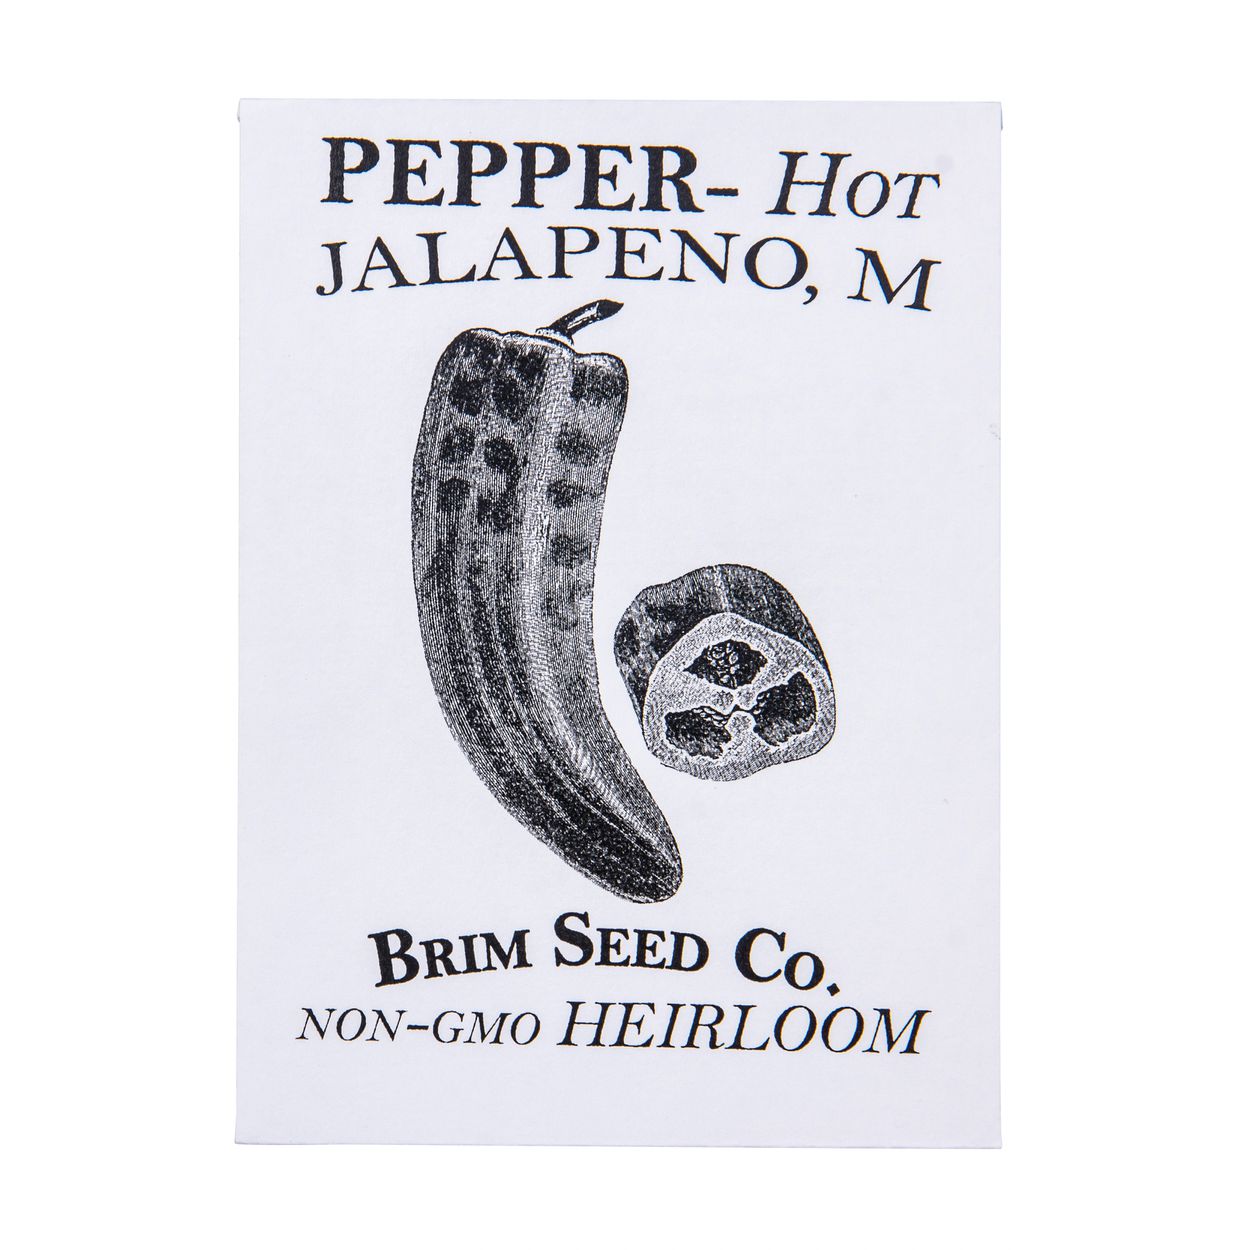 Brim Seed Co. - Hot M Jalapeno Pepper Heirloom Seed